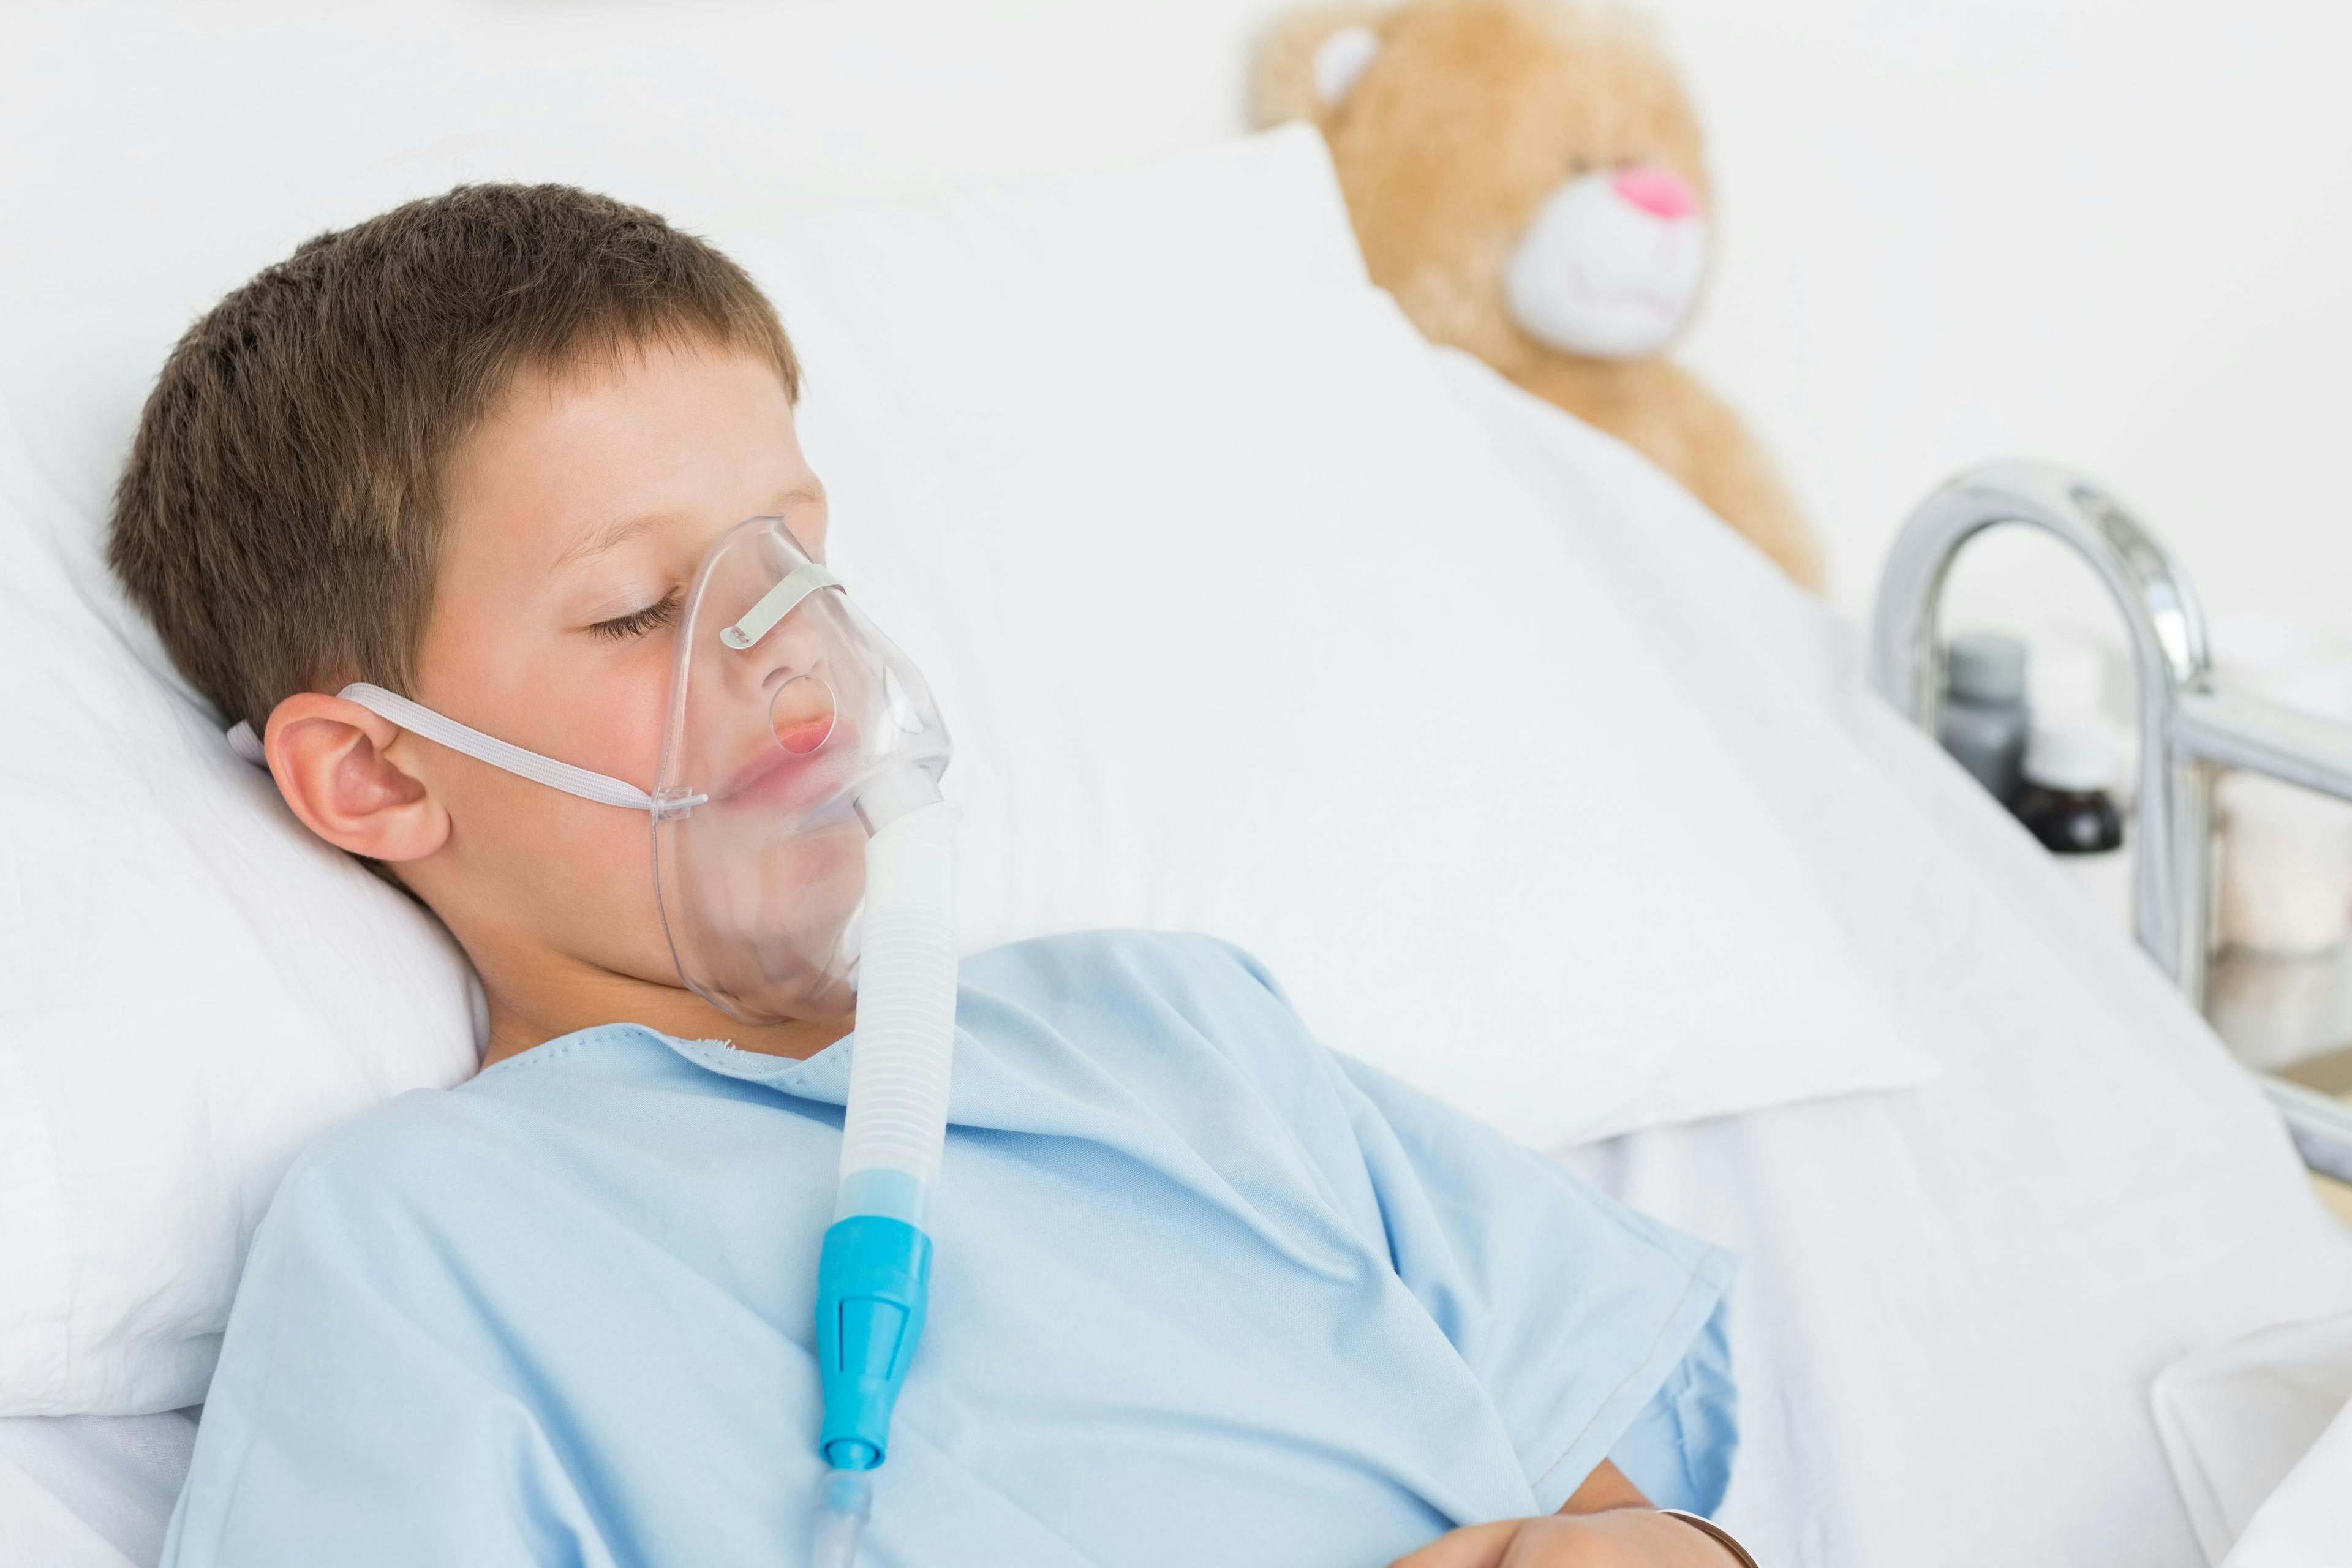 Boy with oxygen mask in bed: © WavebreakmediaMicro - stock.adobe.com